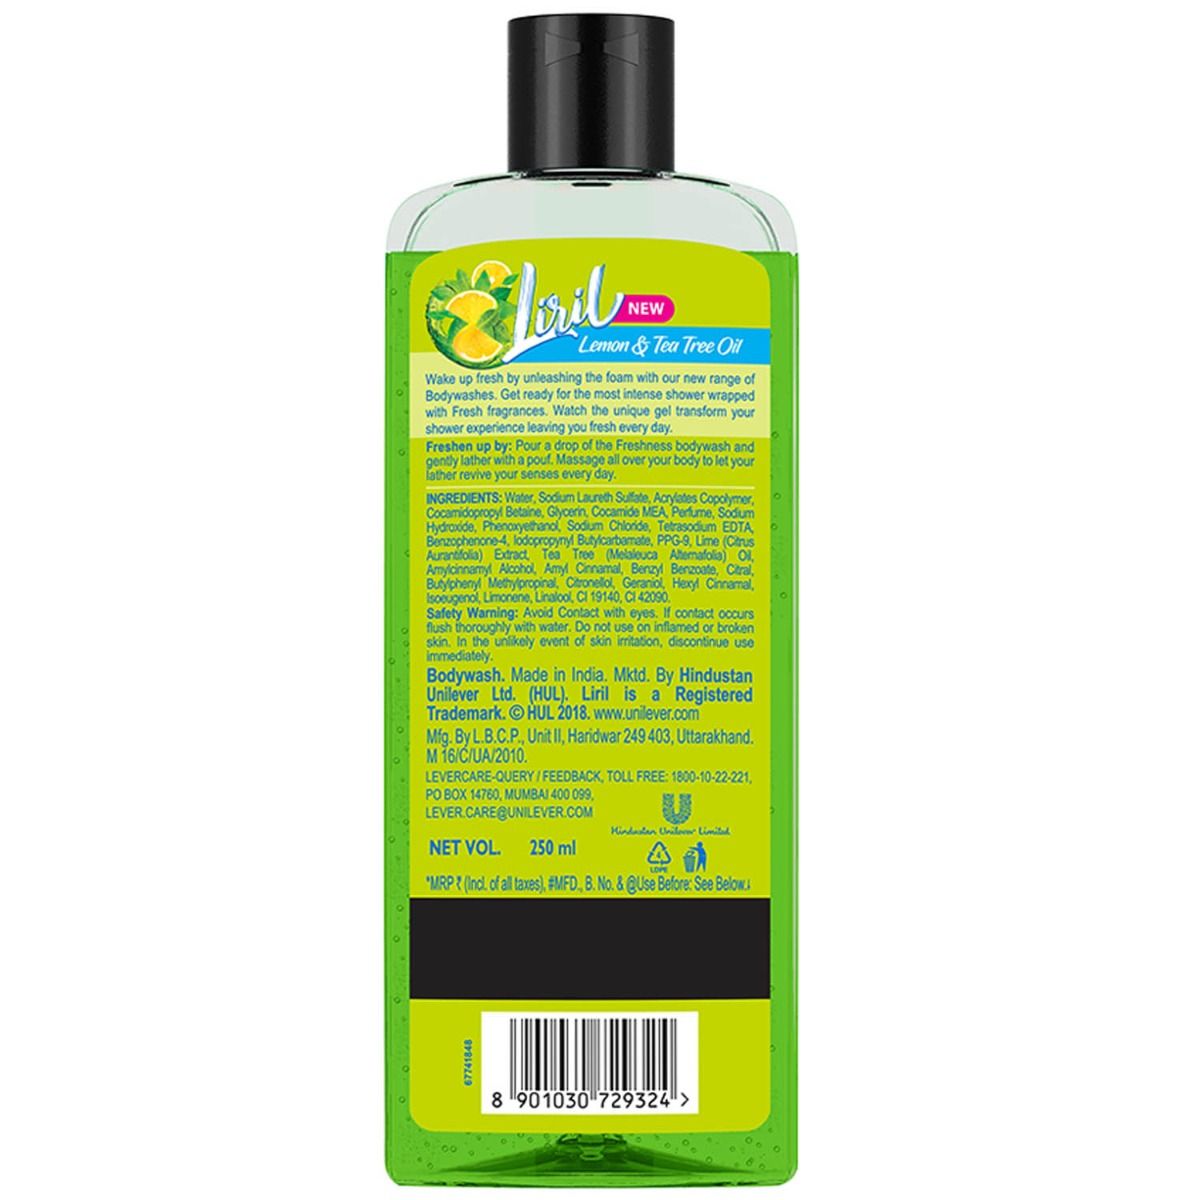 Liril Lemon and Tea Tree Oil Body Wash, 250 ml, Pack of 1 